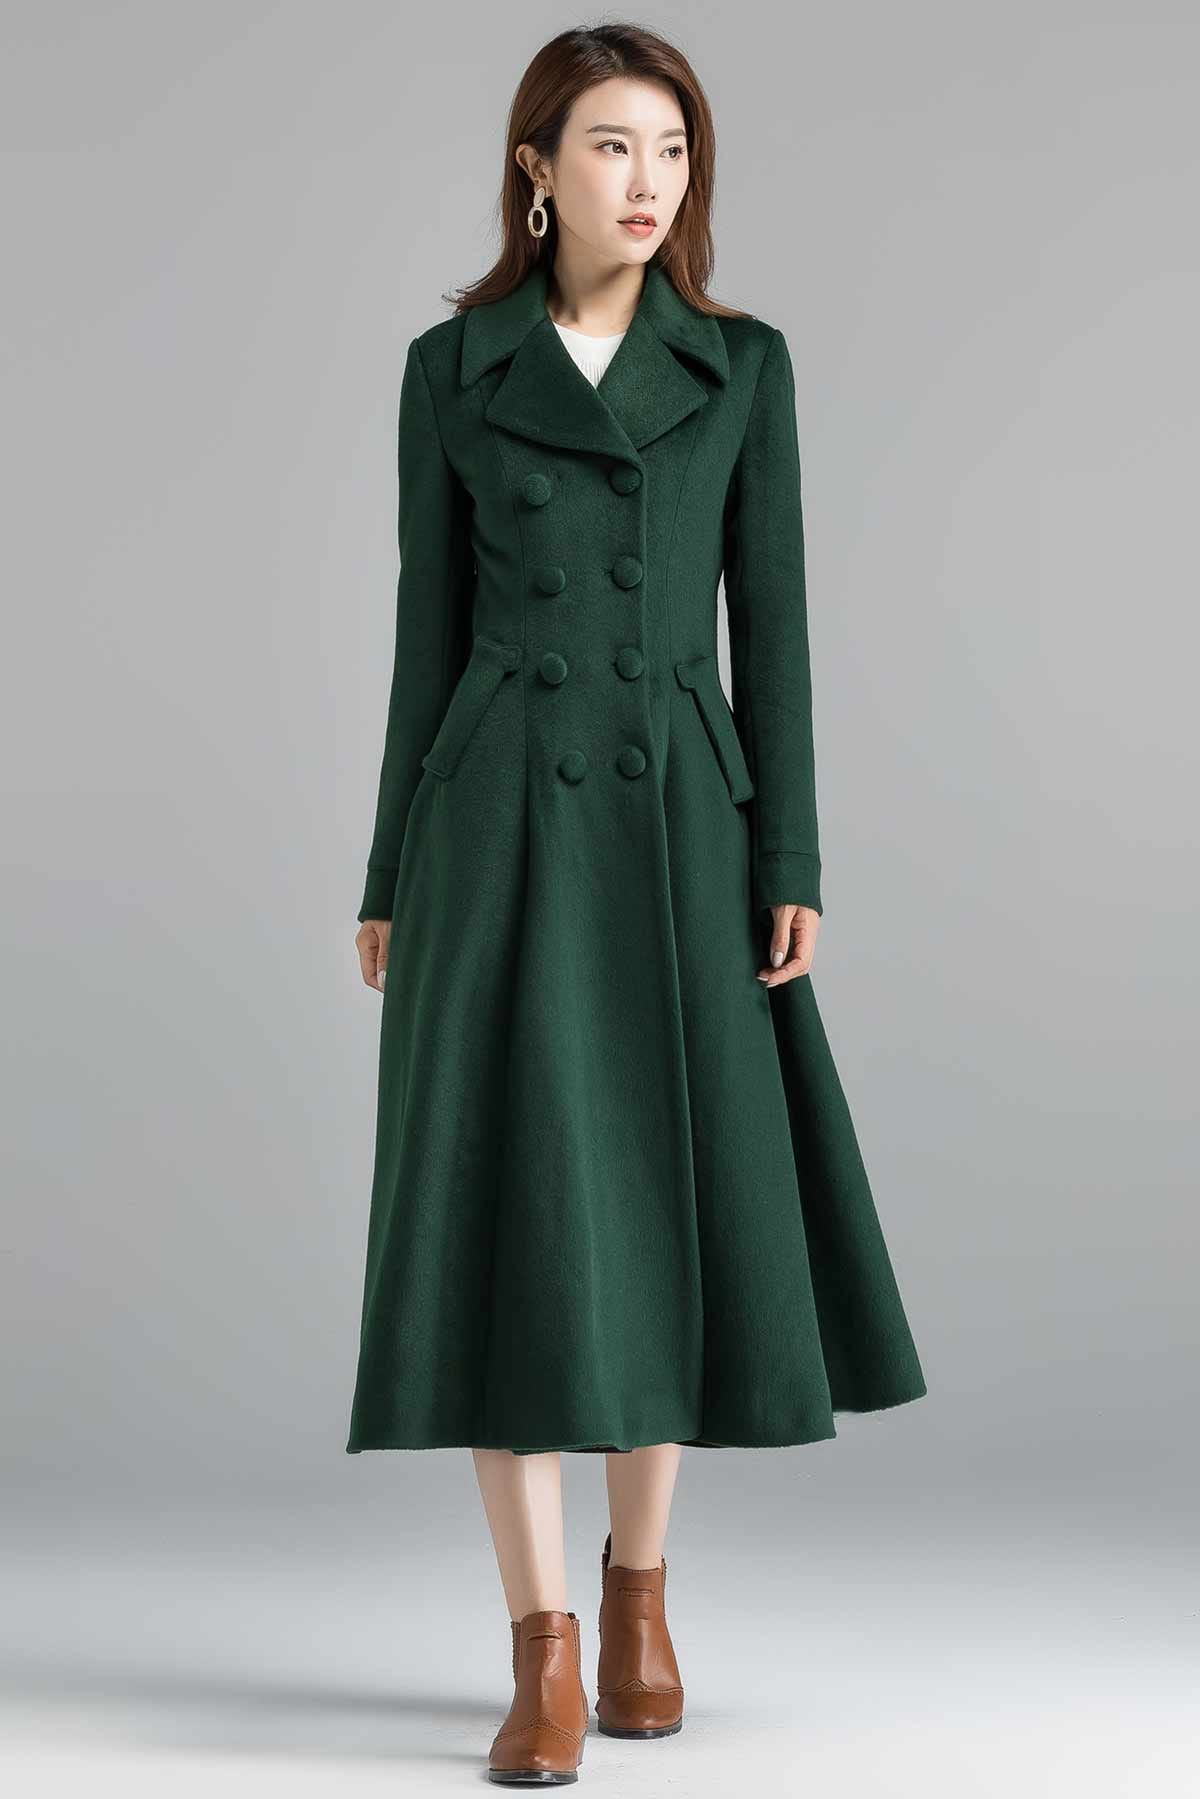 Very pretty green wool coat